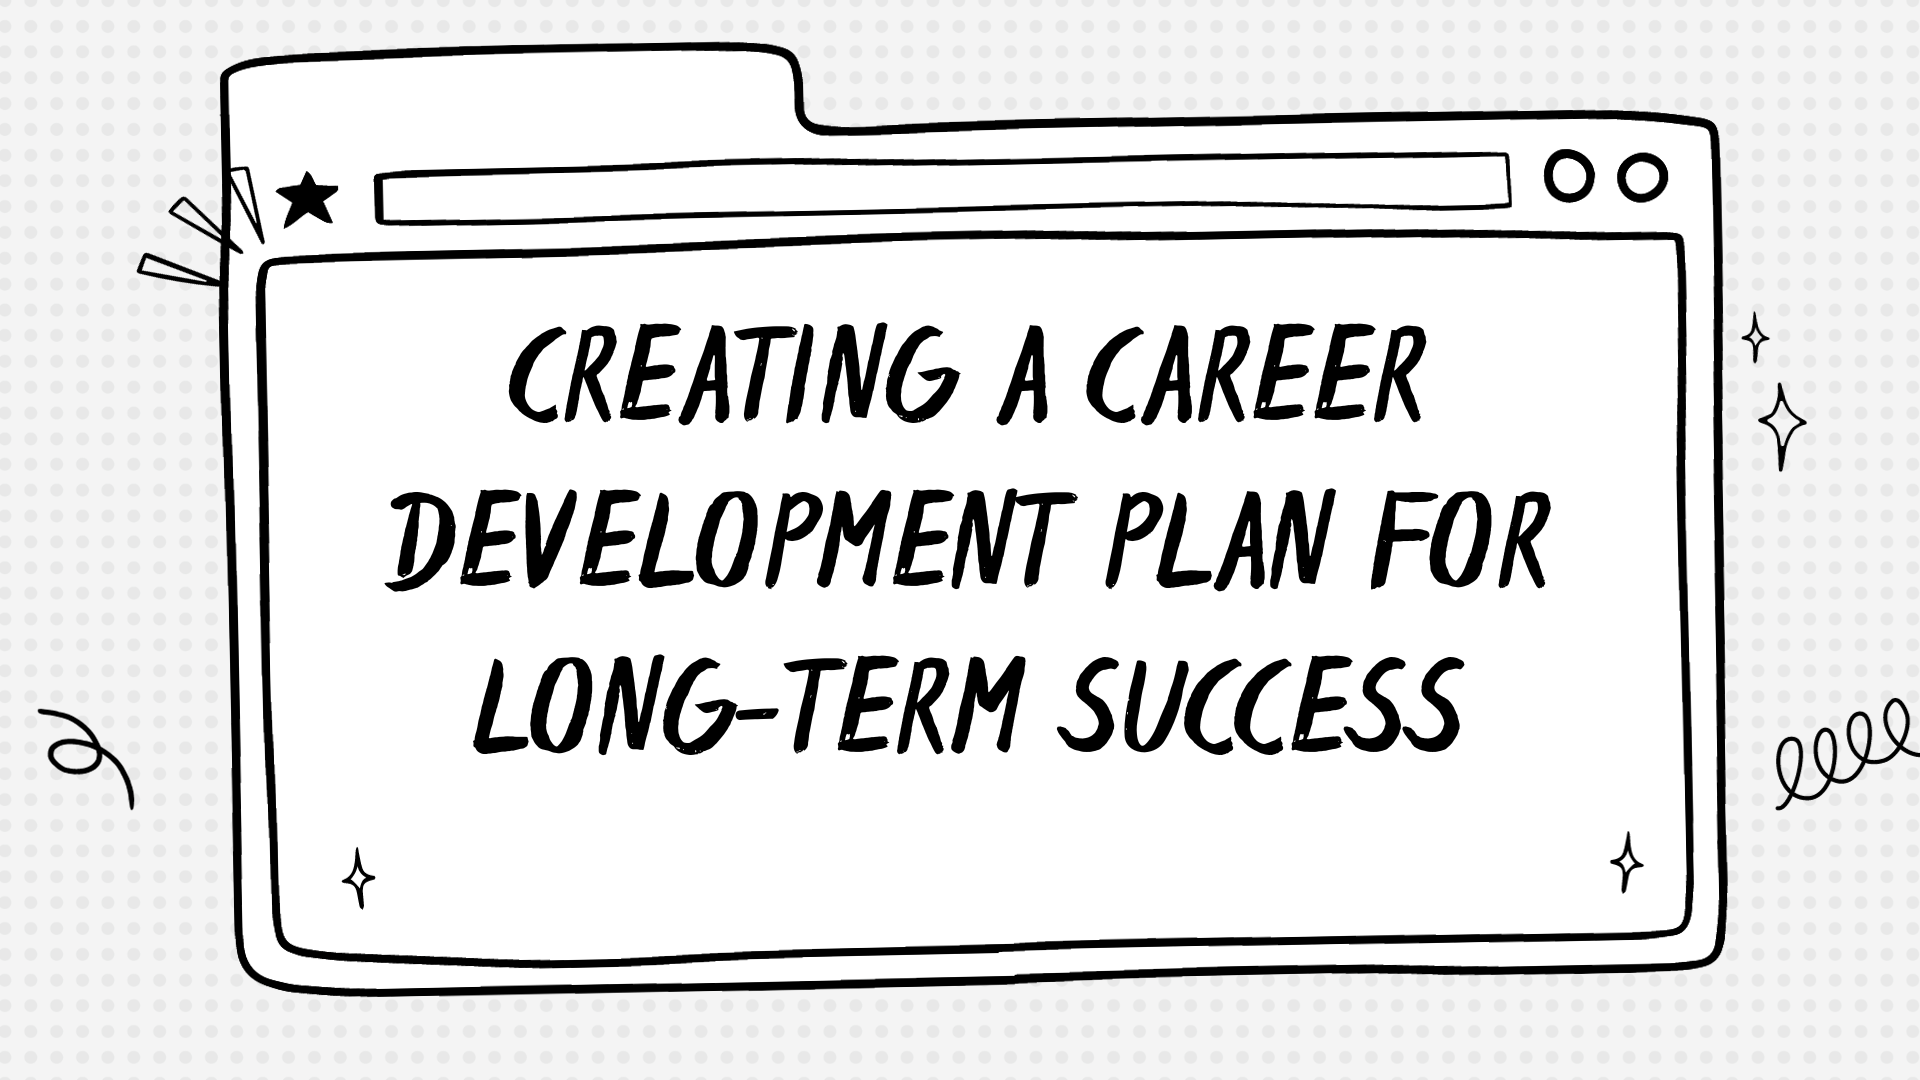 Creating A Career Development Plan For Long-Term Success